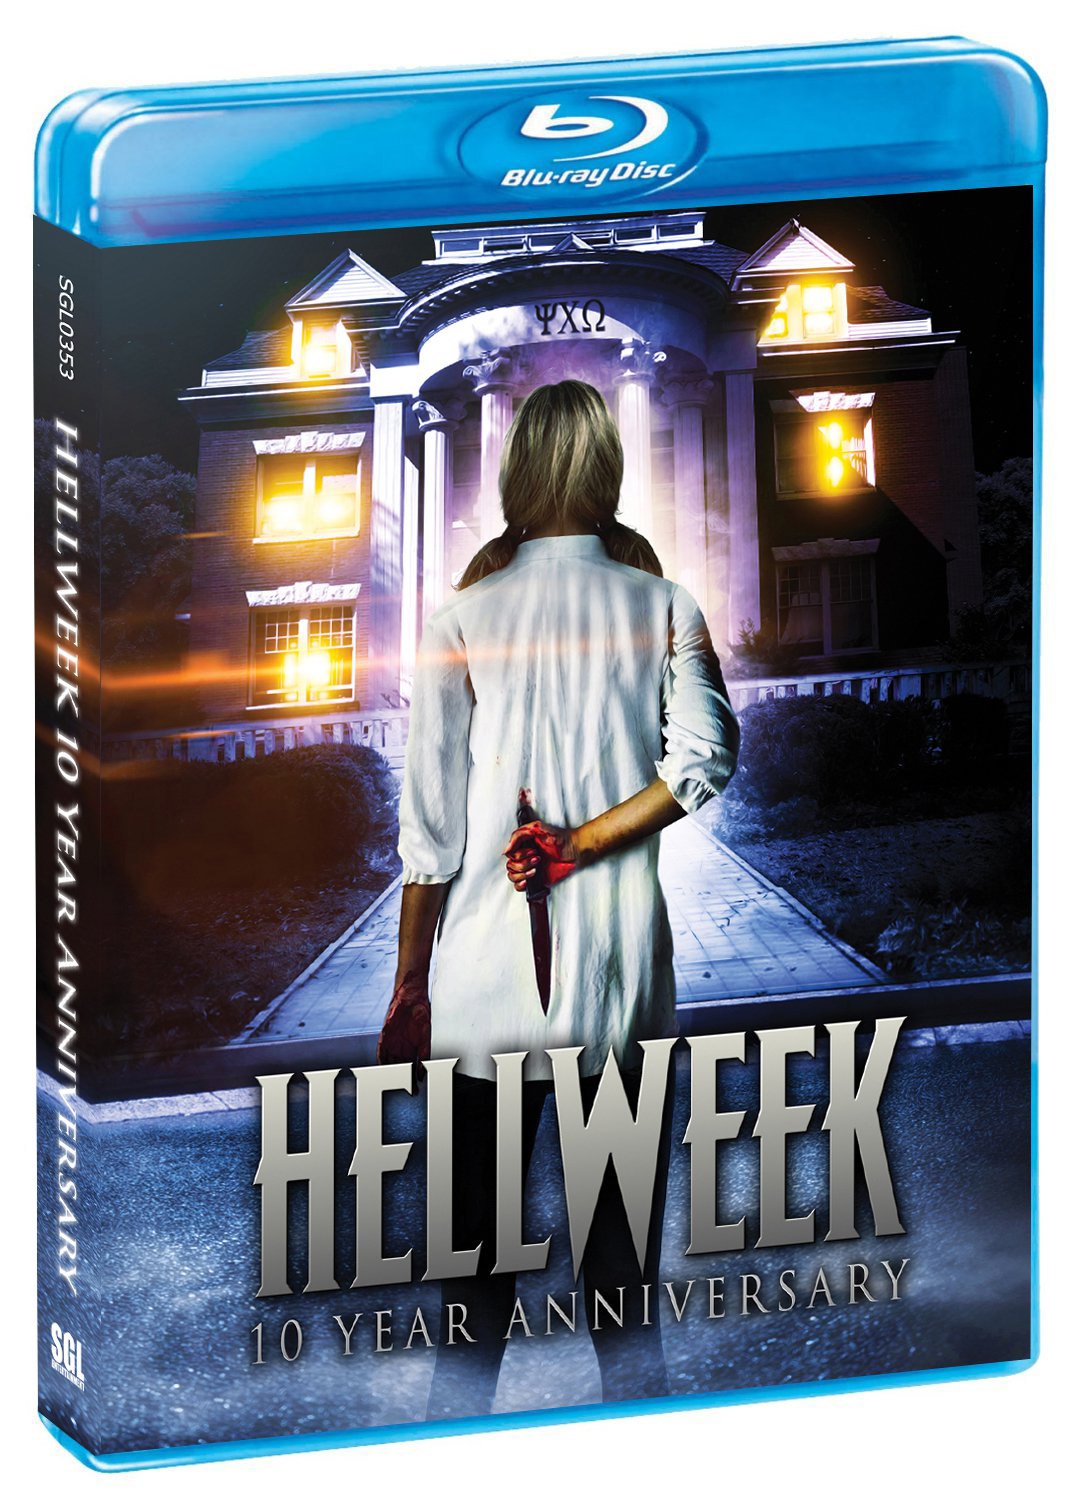 Hellweek 10 Year Anniversary [Blu-ray]